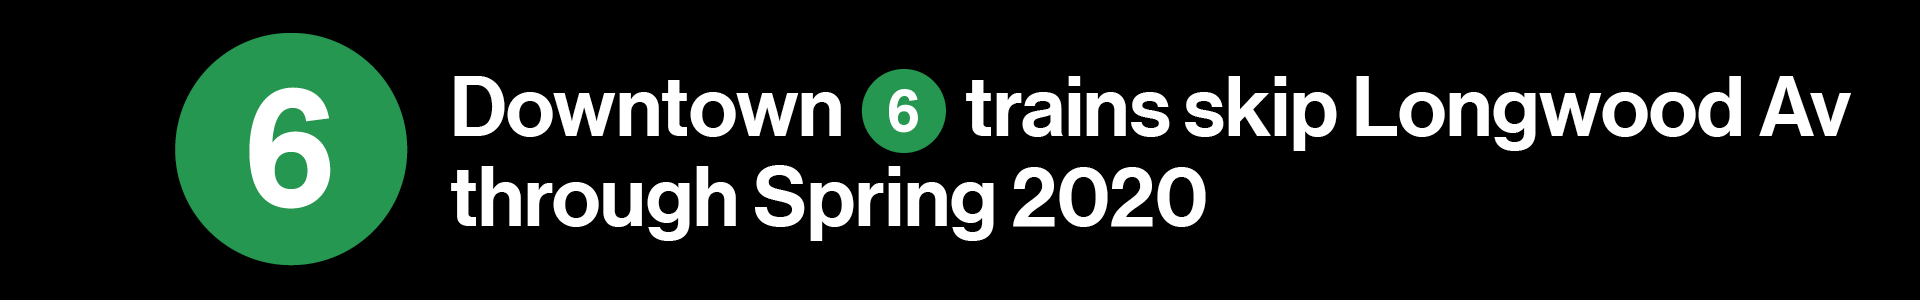 Downtown 6 trains skip Longwood Av through Mar 2020